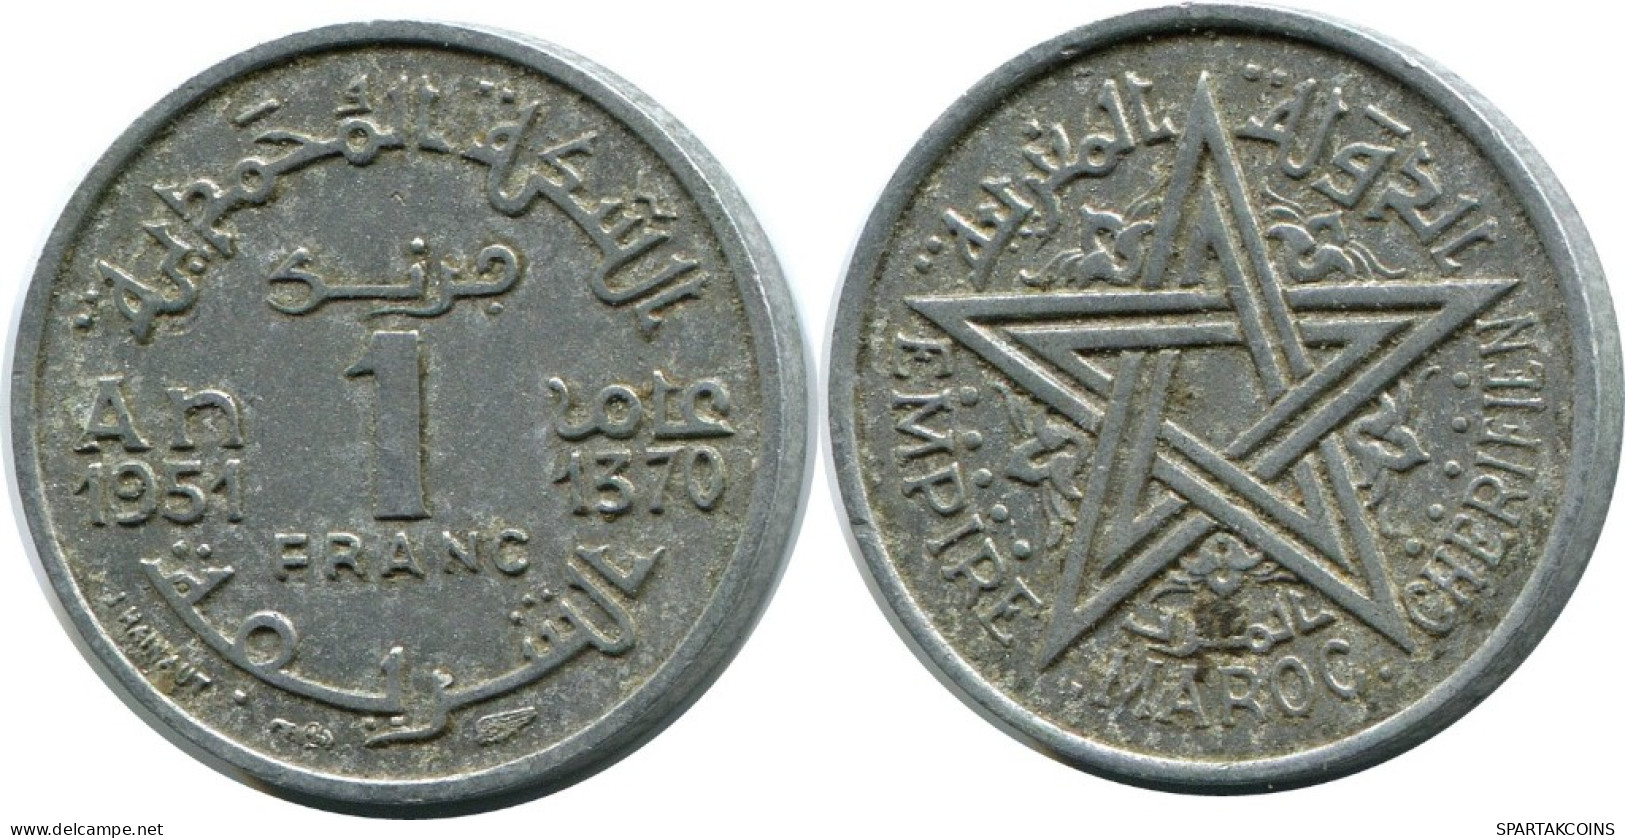 1 FRANC 1951 MOROCCO Islamic Coin #AH695.3.U.A - Marokko